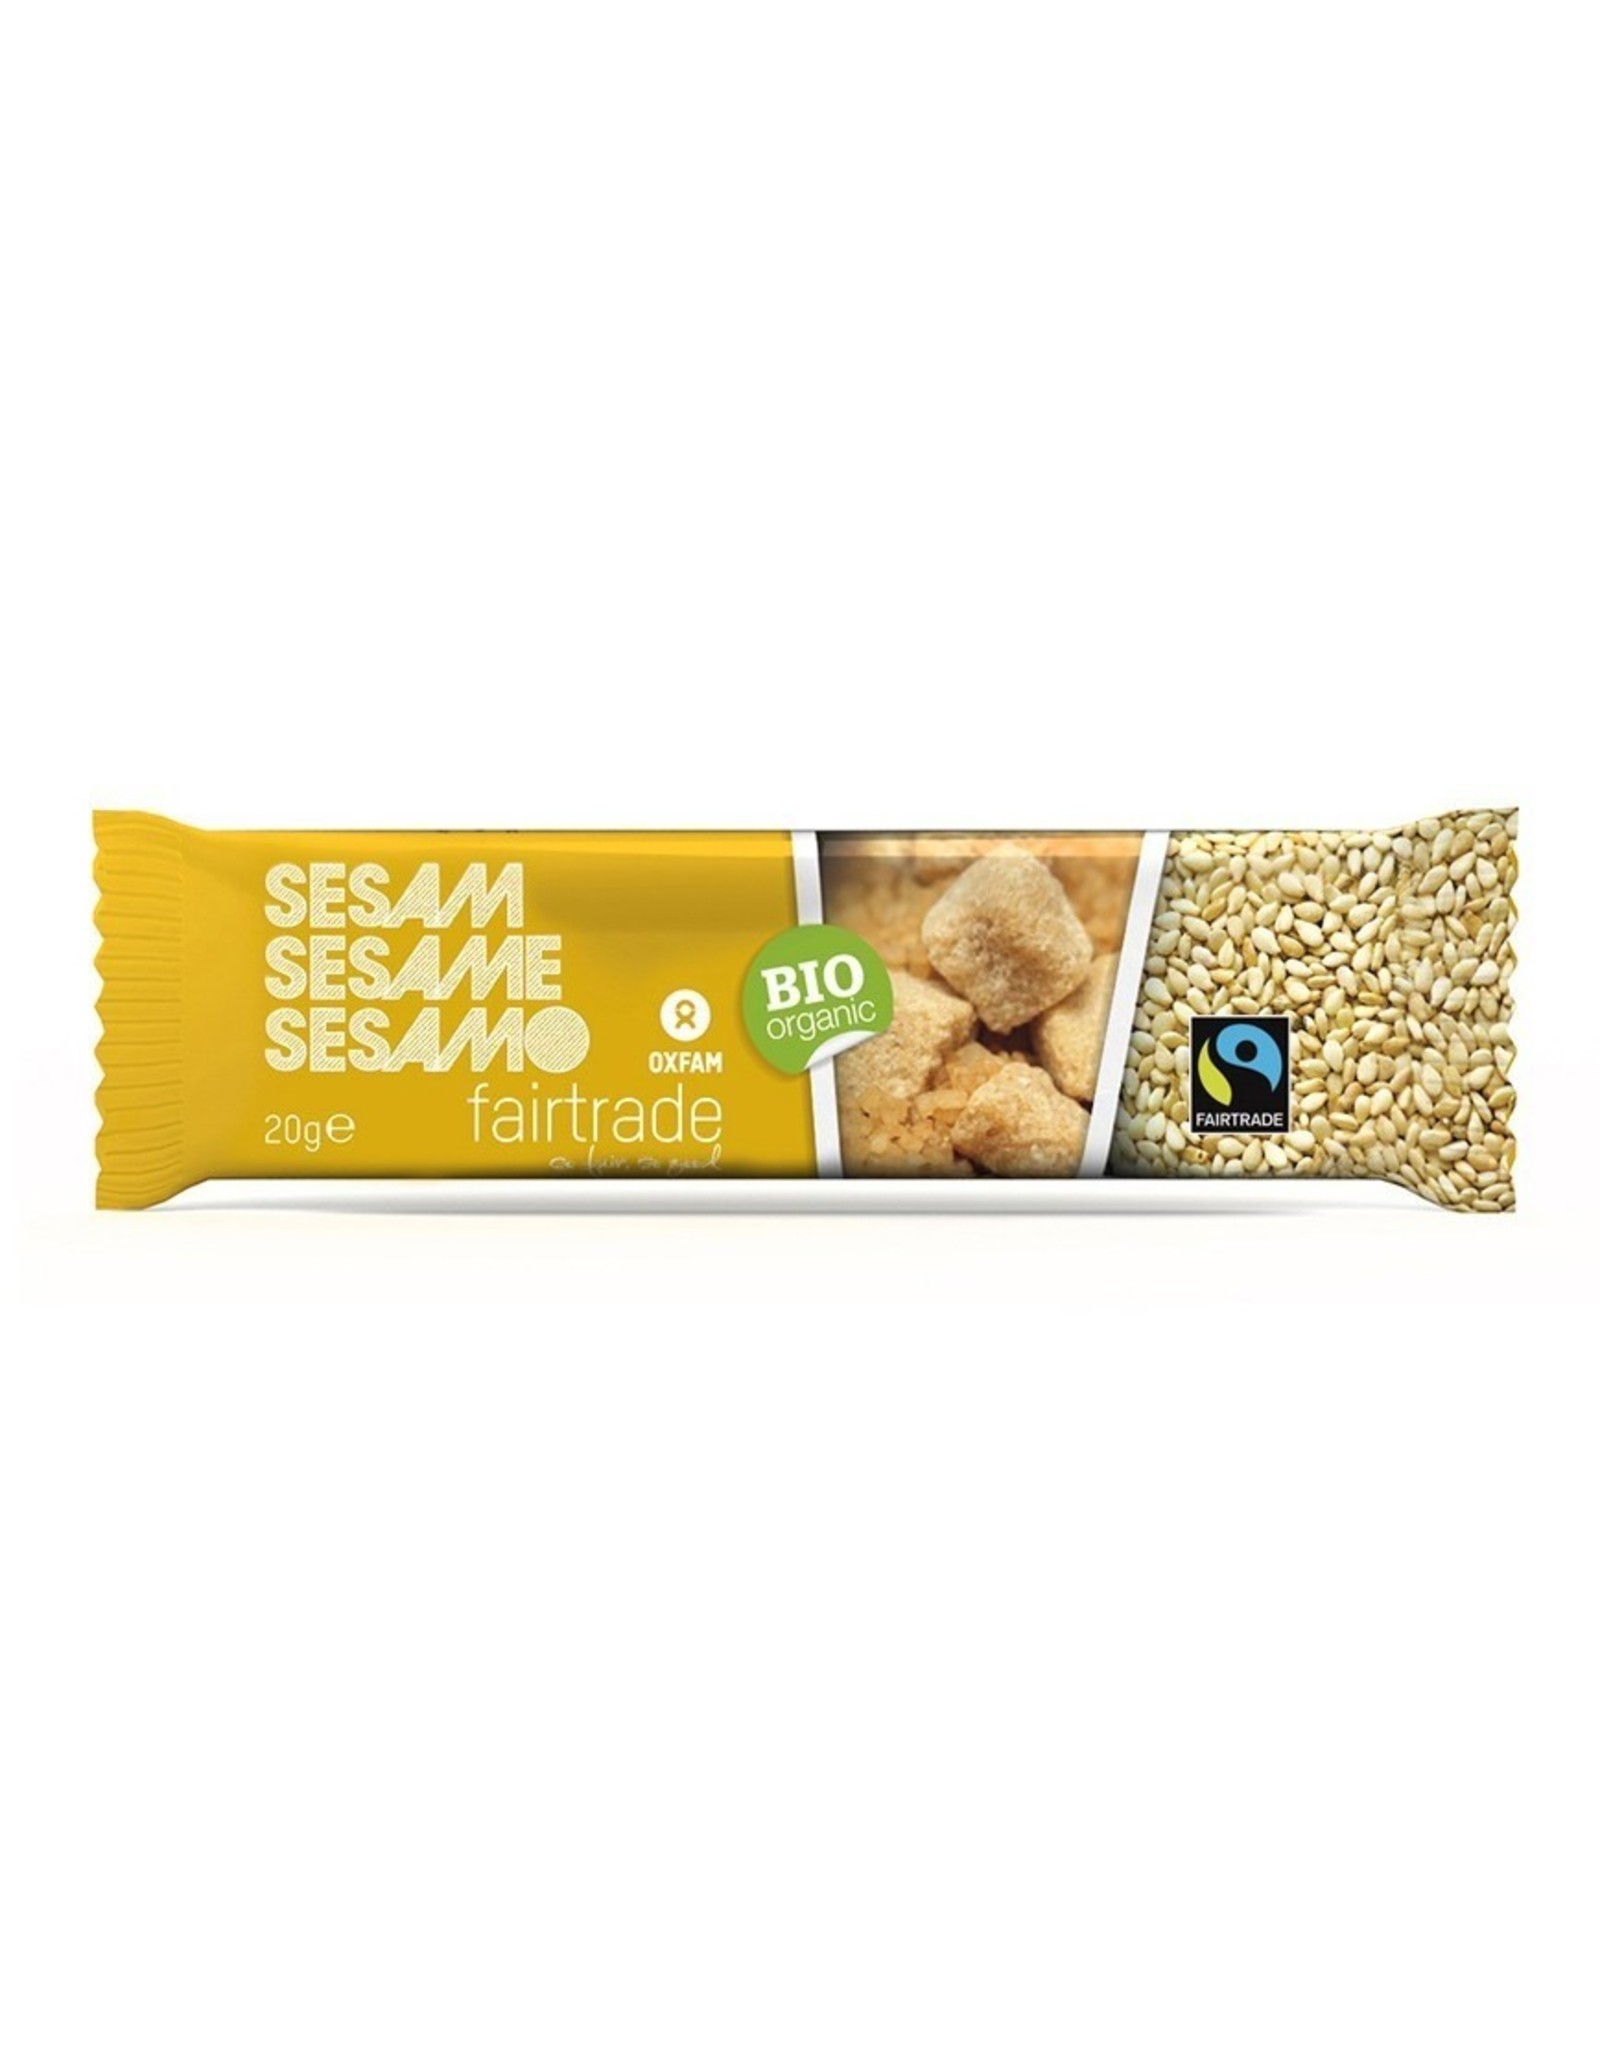 Oxfam Sesame Seed Bar (20g)